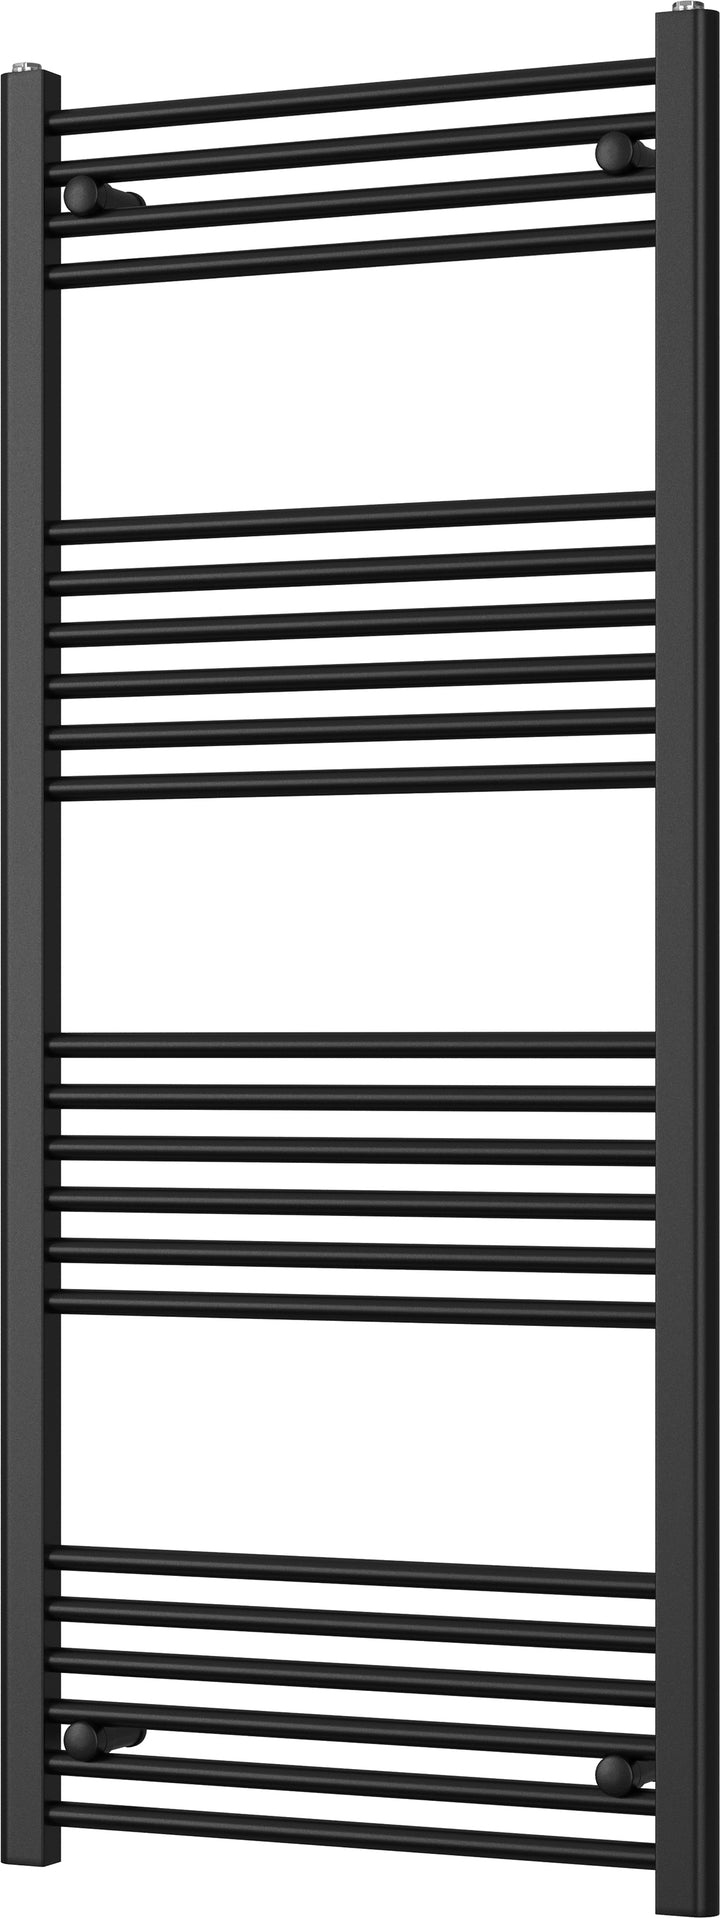 Zennor - Black Heated Towel Rail - H1400mm x W600mm - Straight